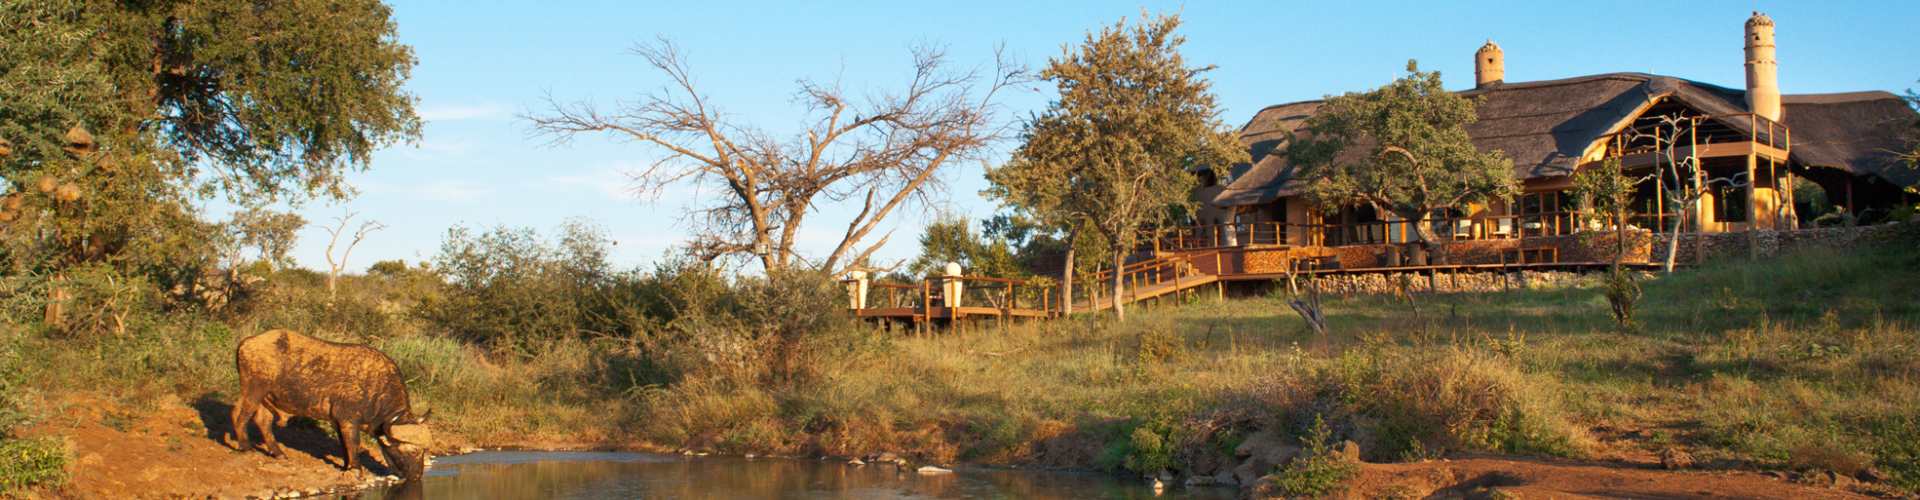 royal-madikwe-safari-lodge-madikwe-game-reserve-zuid-afrika-header